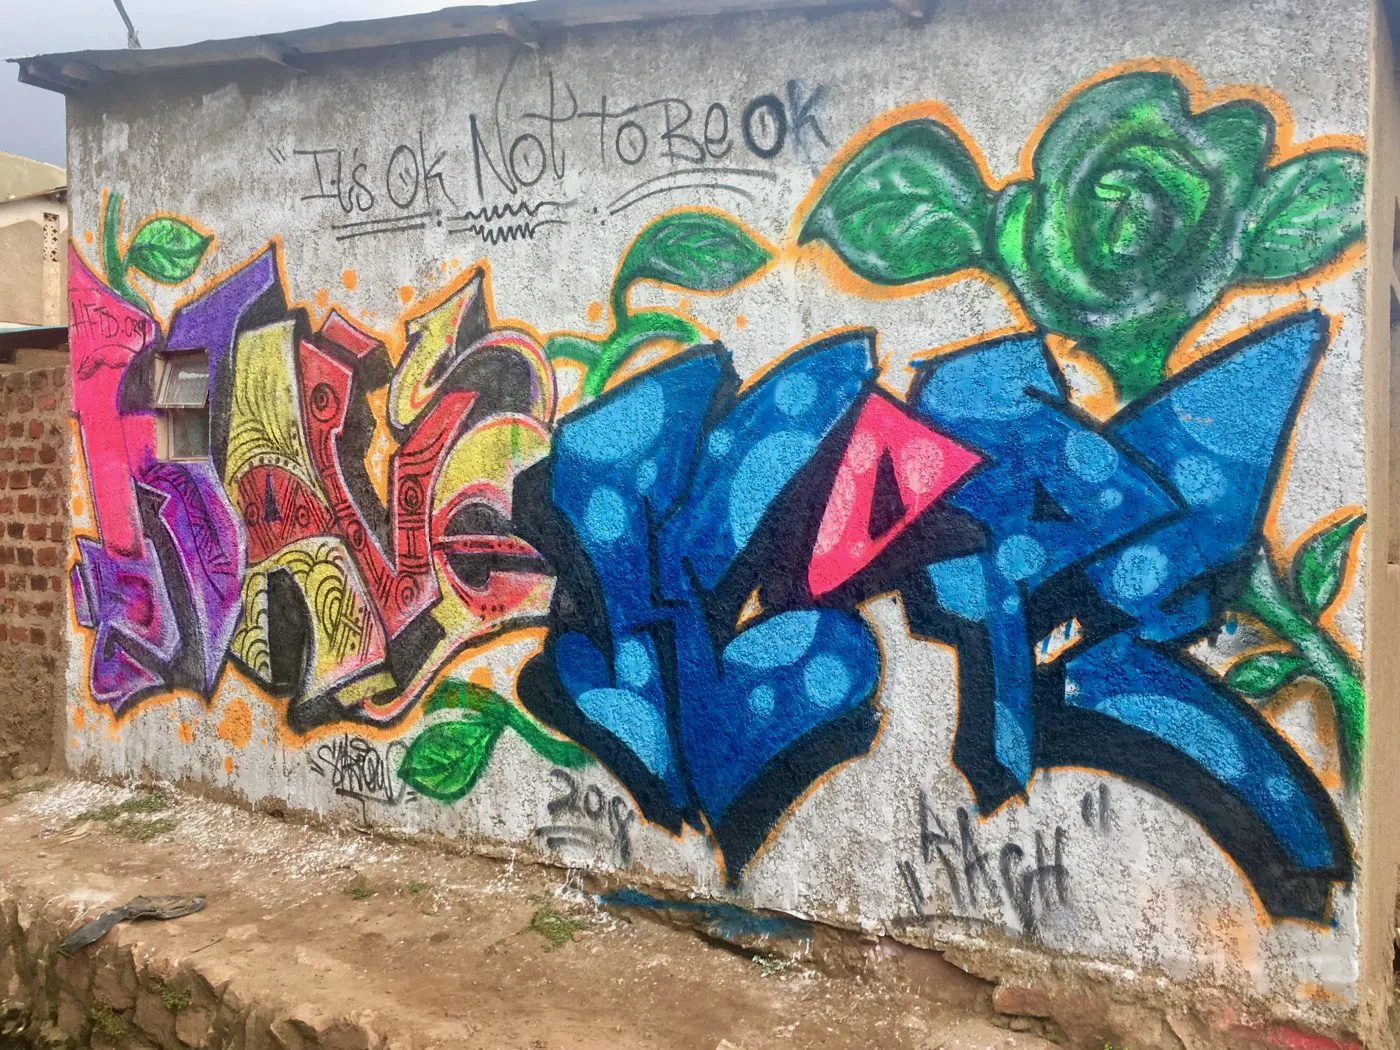 A Sparrow and Rach original “HAVE HOPE” mural in Kampala, Uganda.